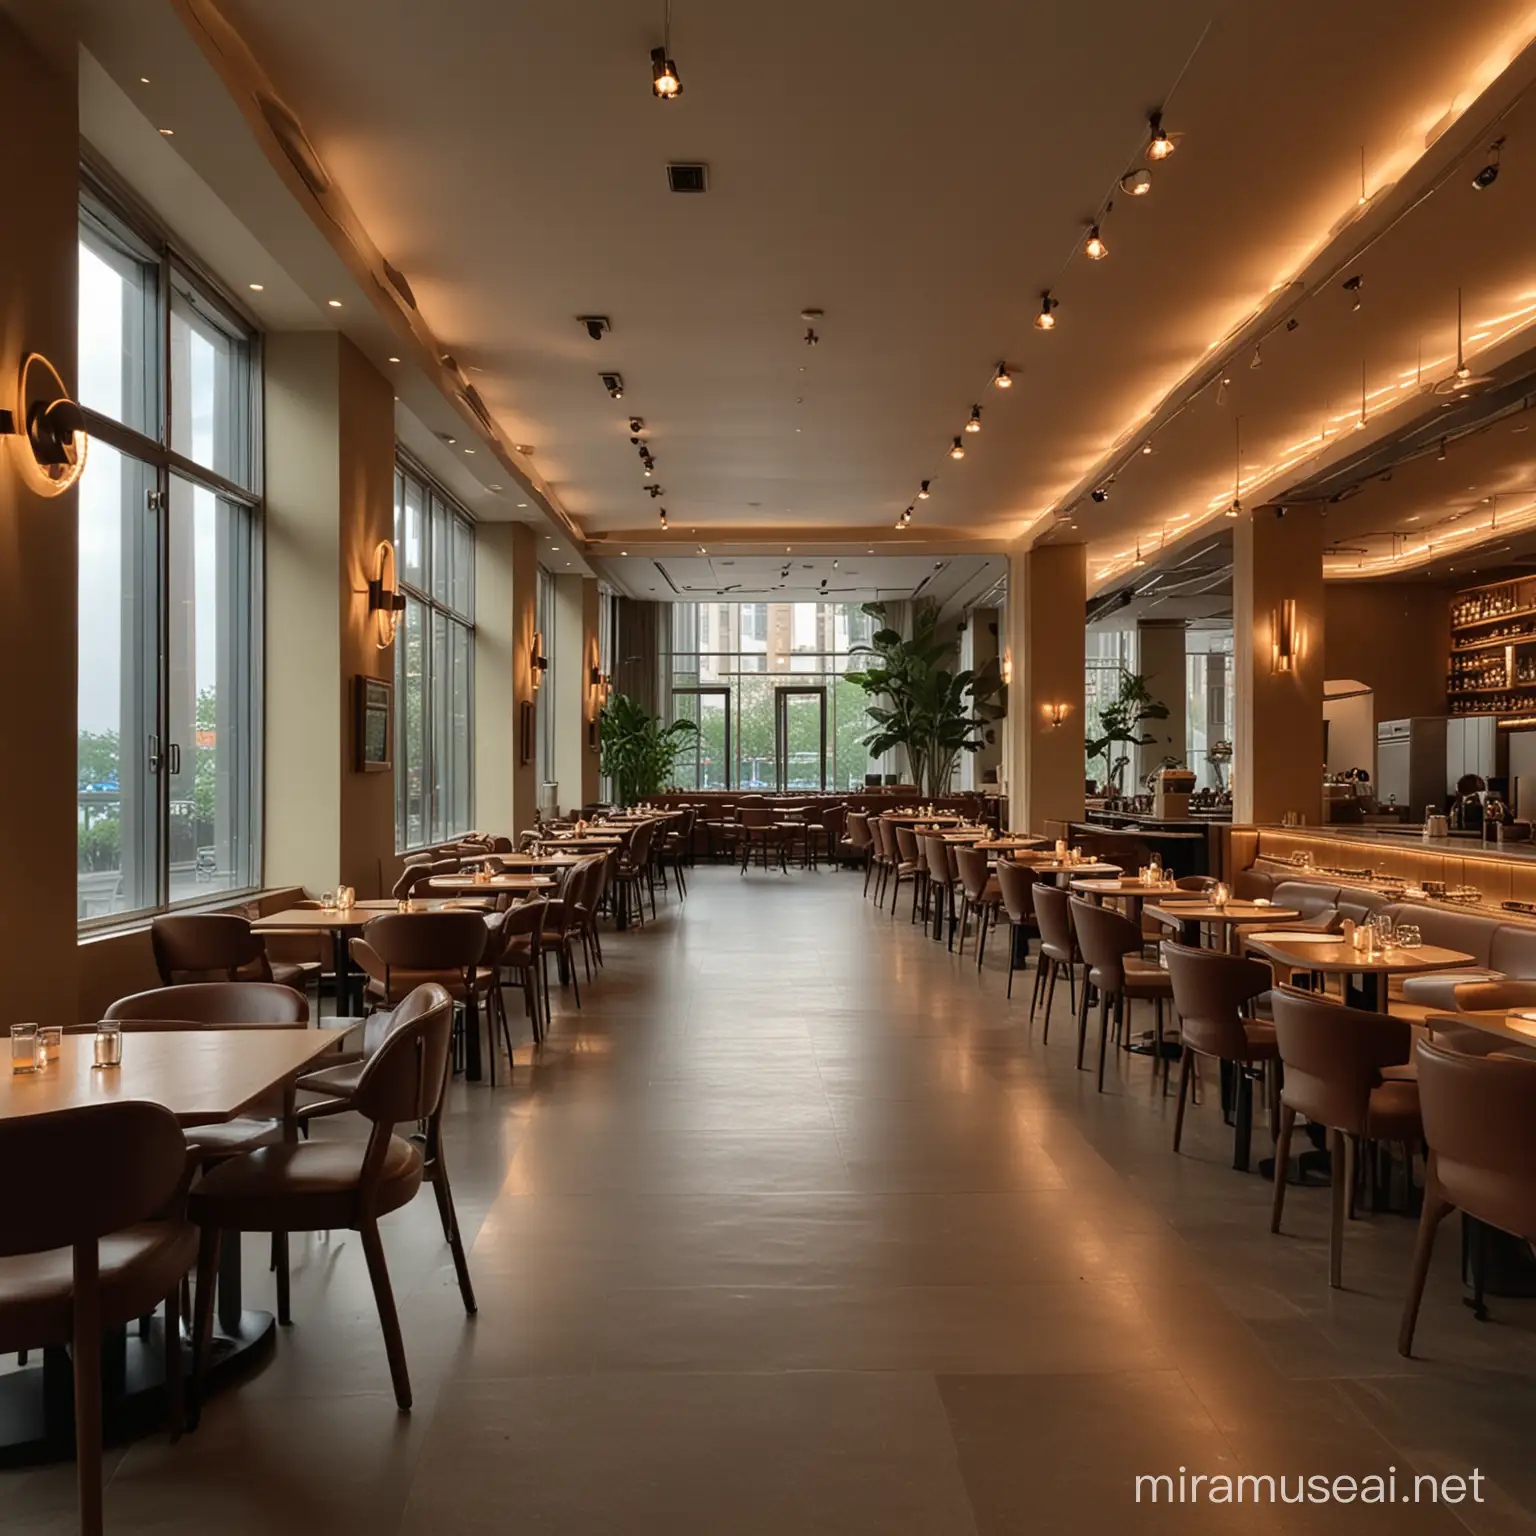 Luxurious Indoor Cafeteria with Dim Lighting